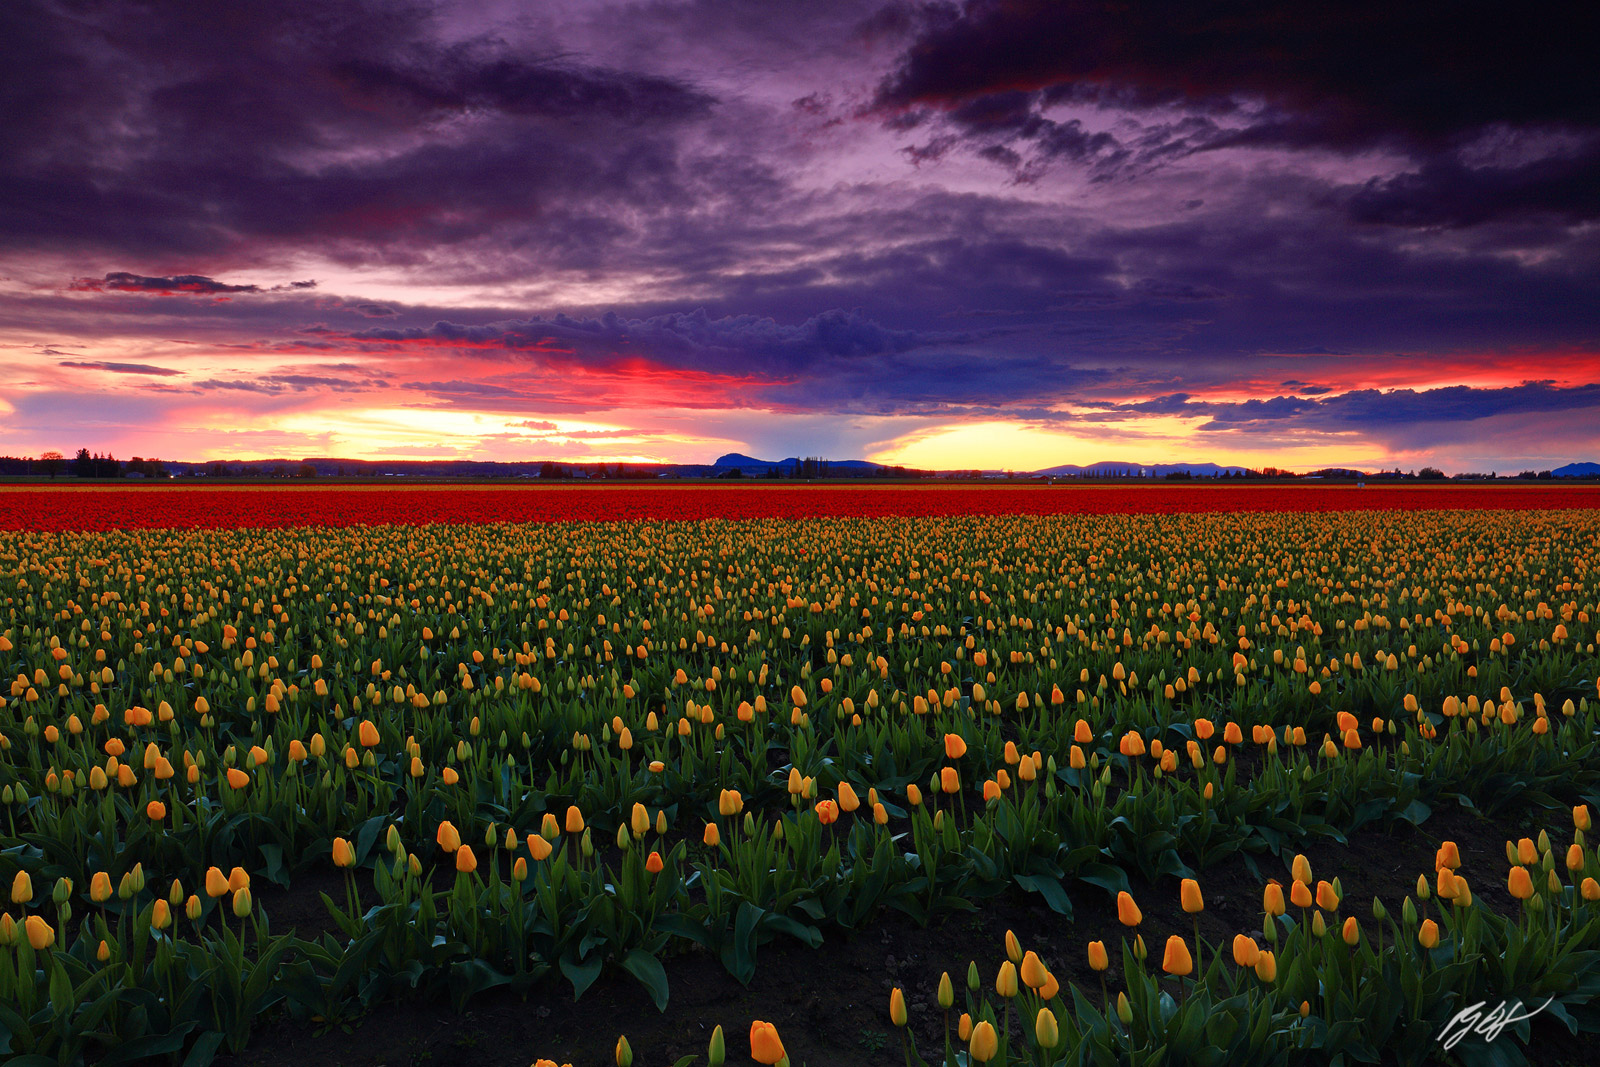 Sunset over the Roozengaarde Tulip Fields in Skagit Valley in Washington